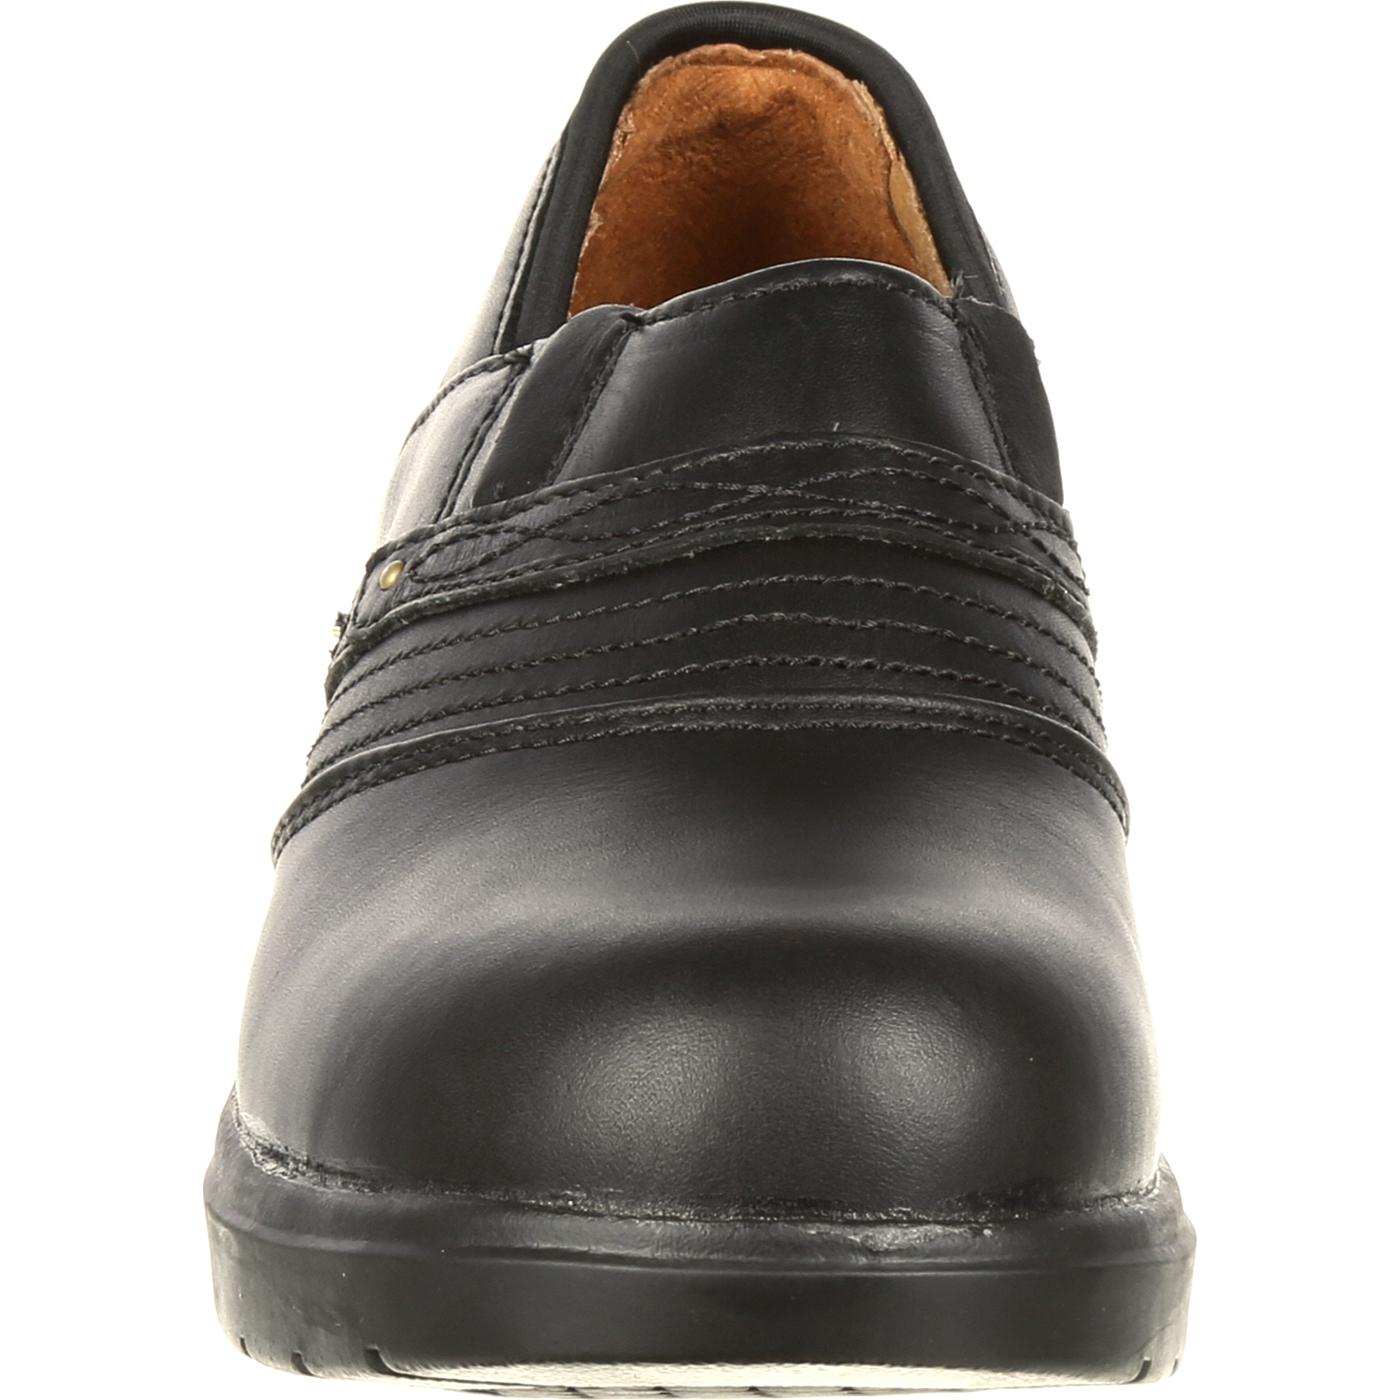 Ariat Women's Steel Toe Safety Clog Work Shoe #10002368